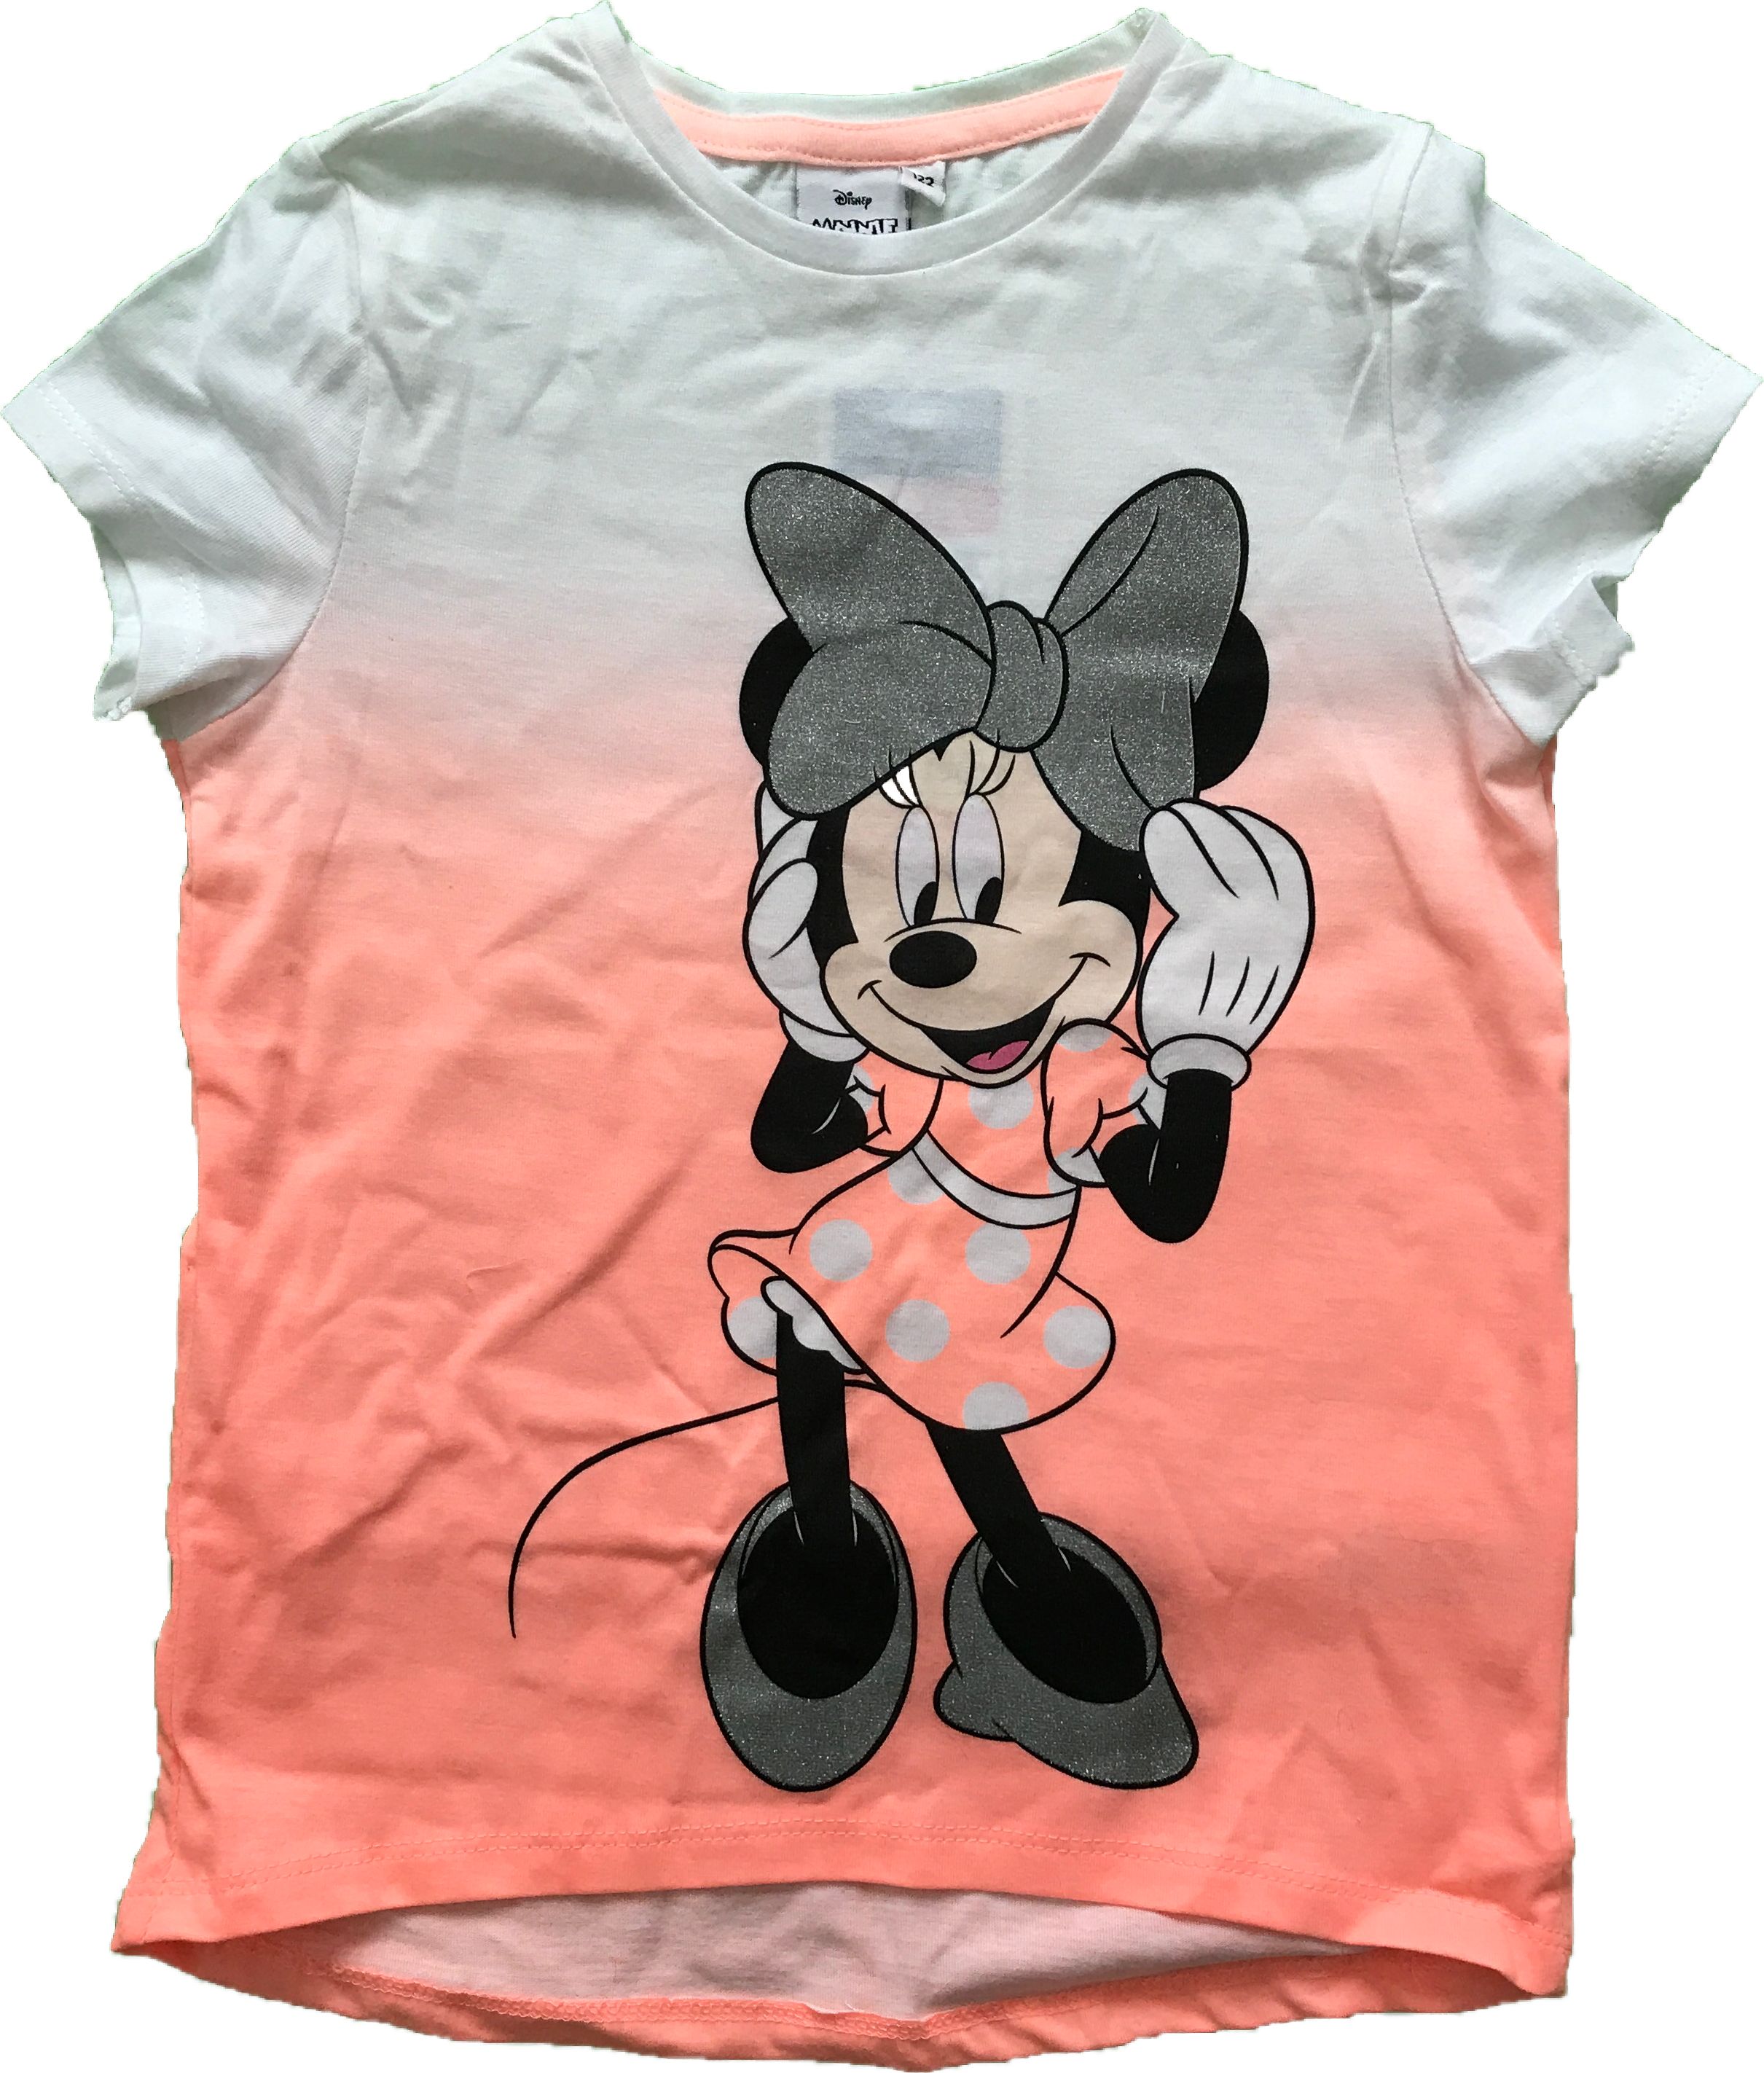 Tričko s motivem Minnie 104 - 4 roky - obrázek 1